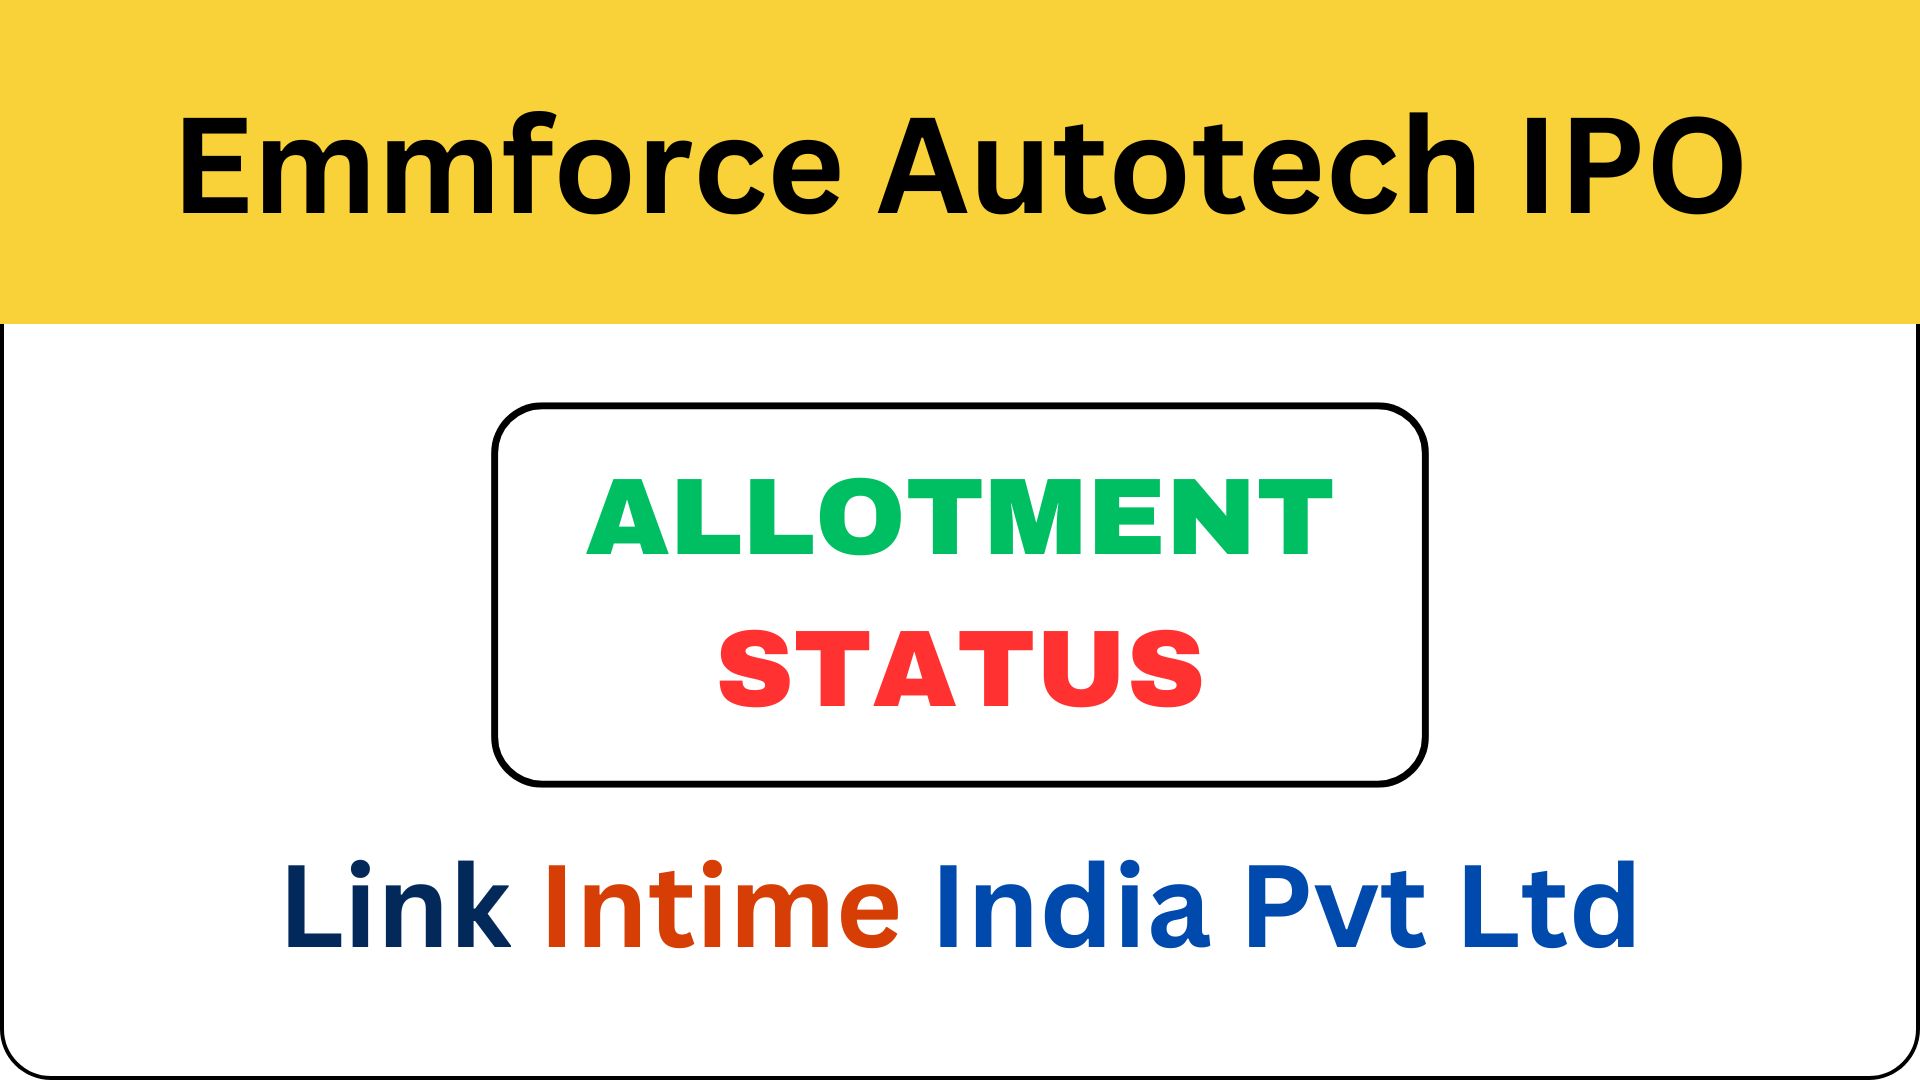 Emmforce Autotech IPO Allotment